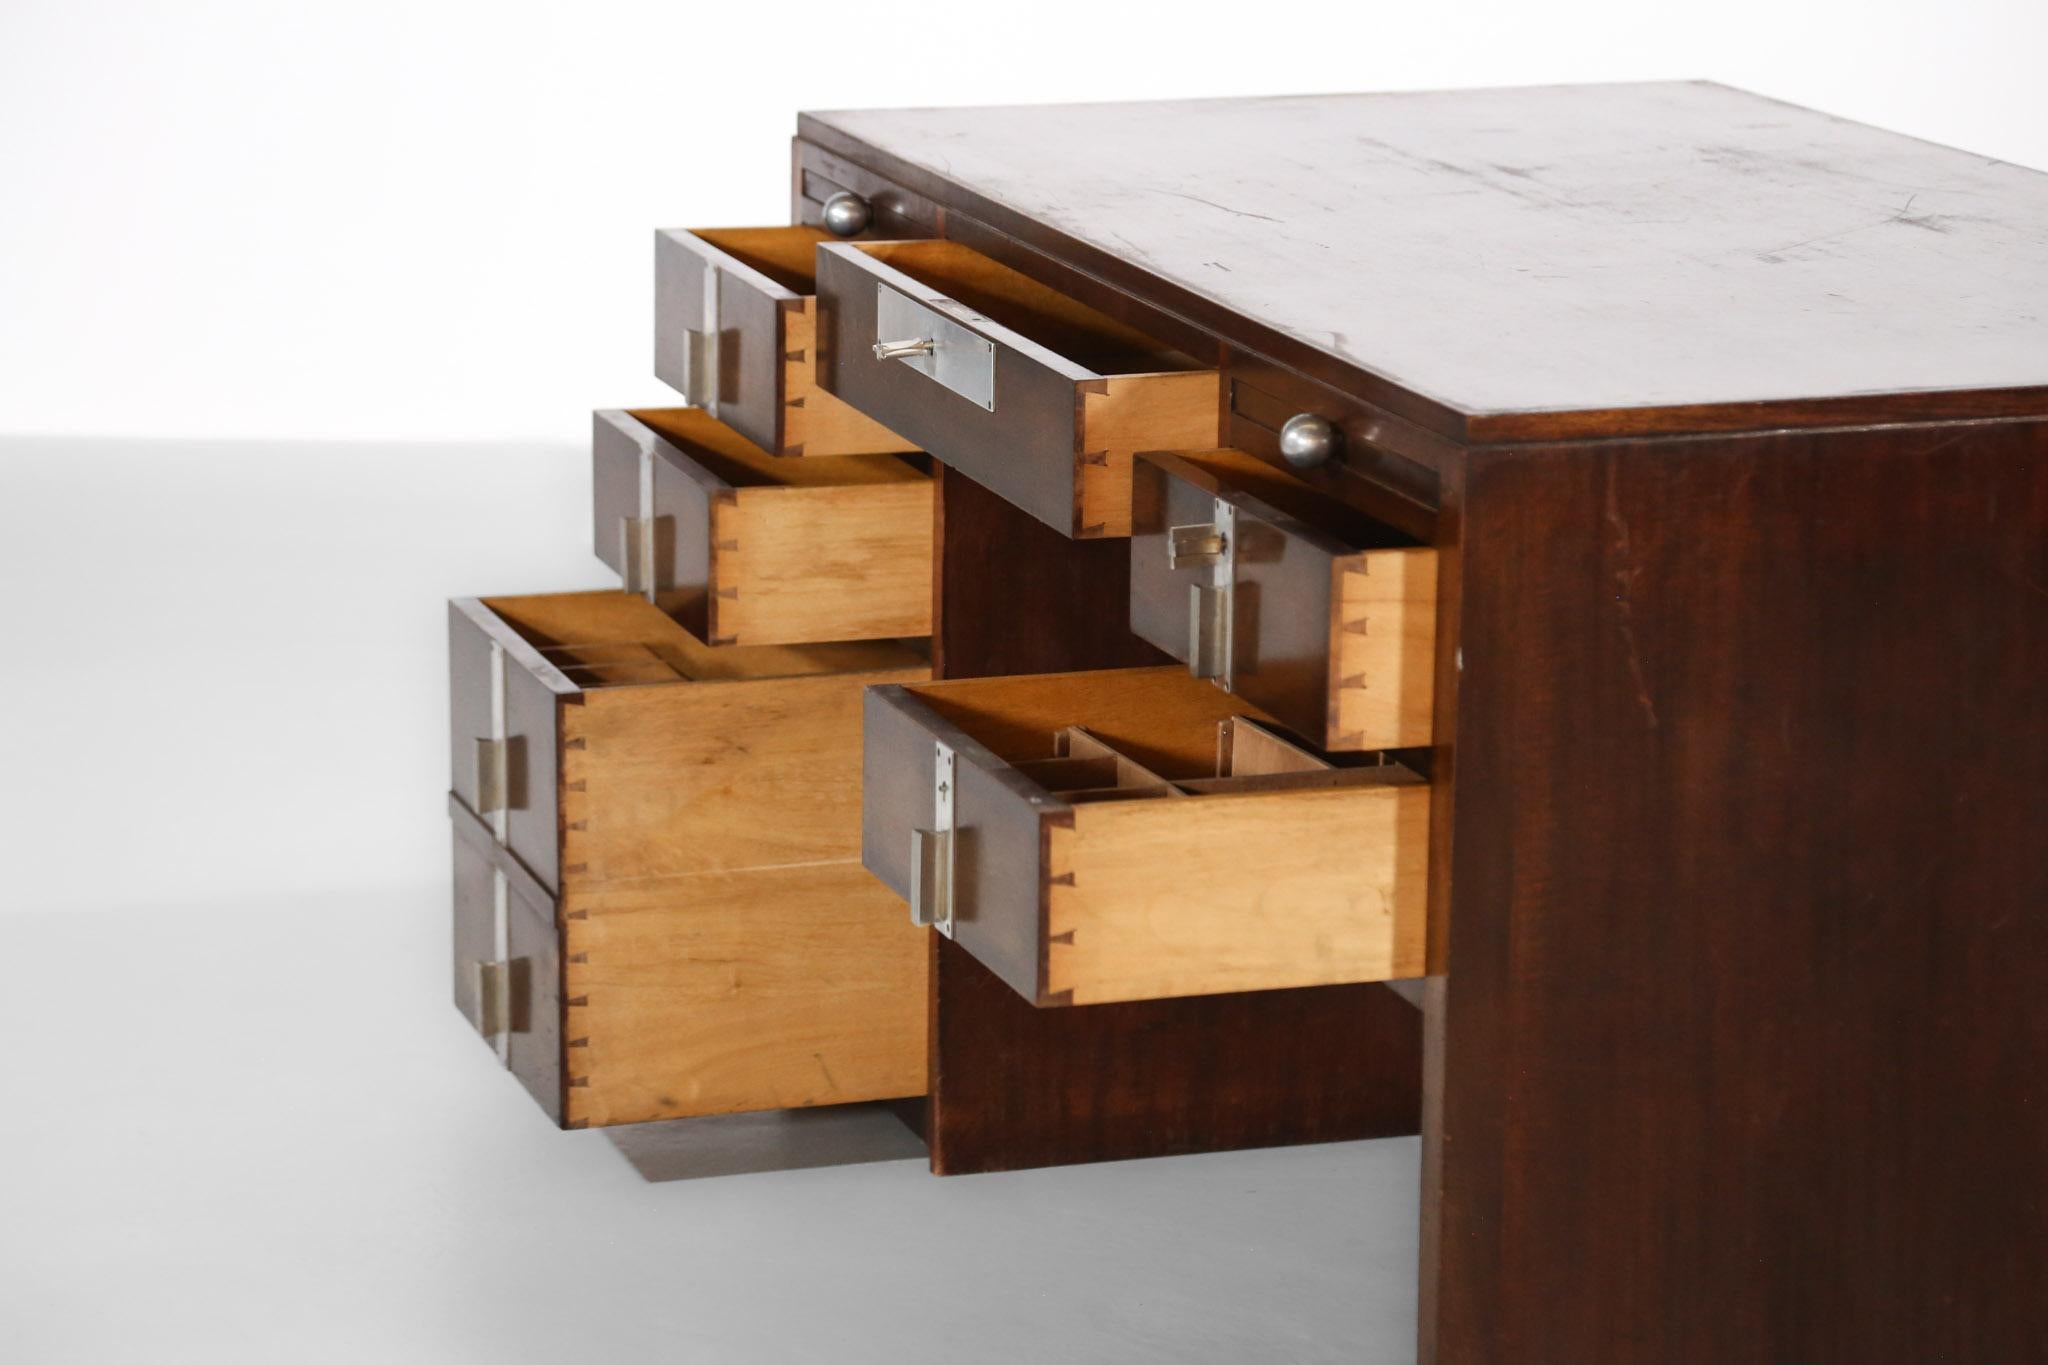 French Art Deco Desk, Pierre Jeanneret/Jacques Adnet Style, Modernist